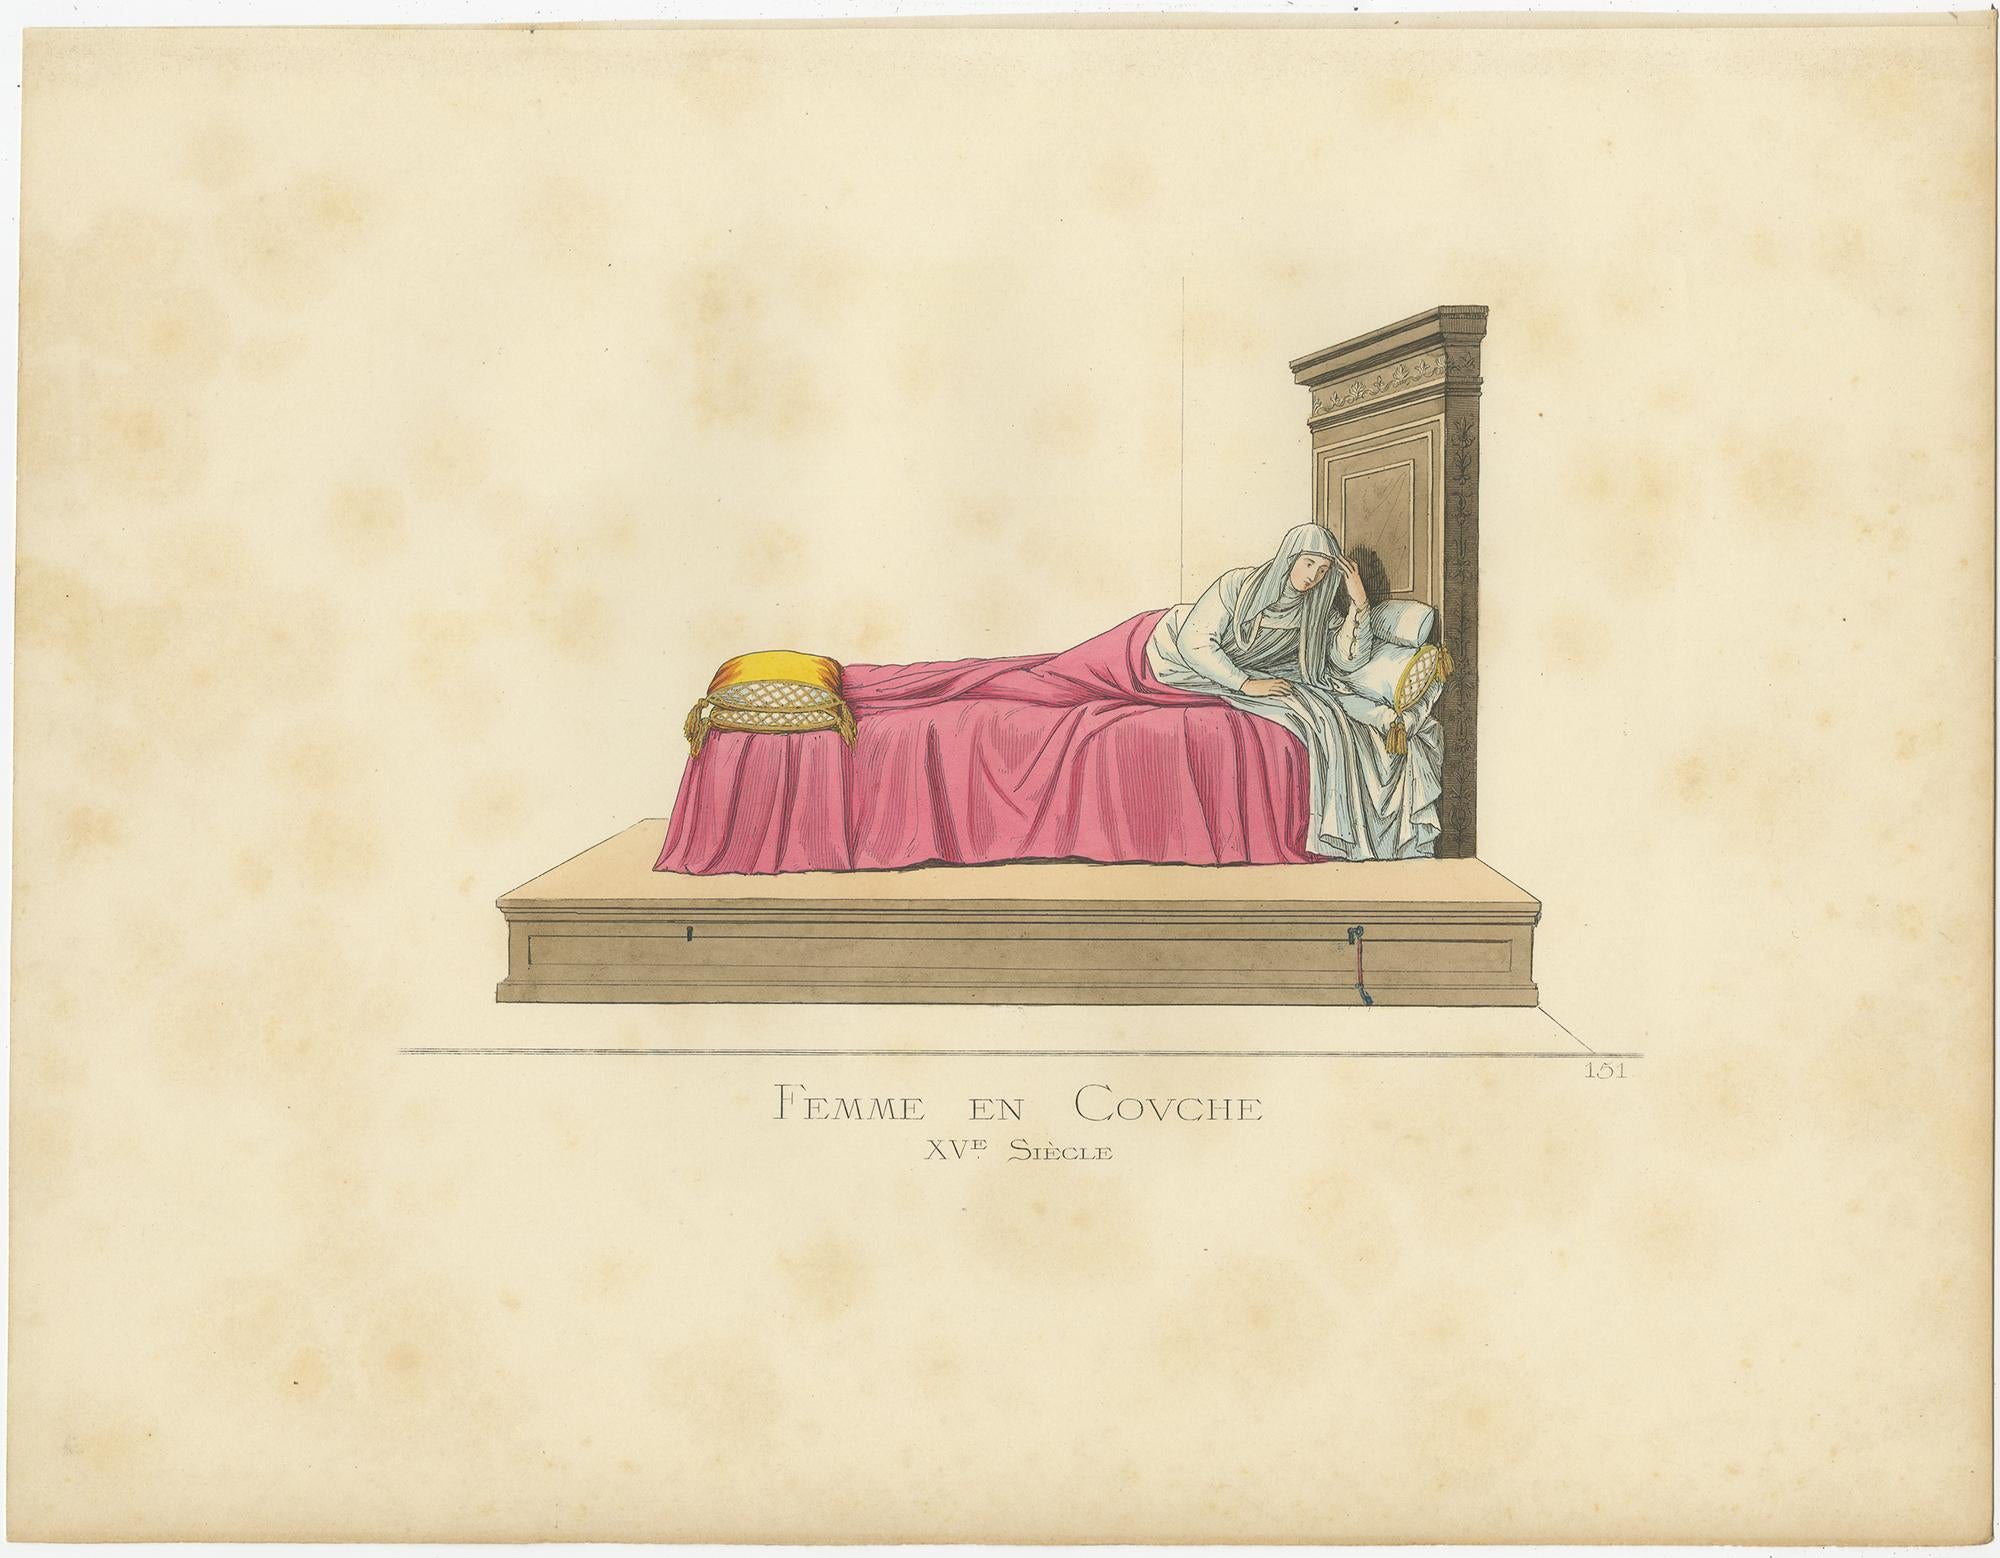 Antique print titled ‘Femme en Couche, XVe Siecle.’ Original antique print of a woman in bed, Italy 15th century. This print originates from 'costumes historiques de femmes du XIII, XIV et XV siècle' by C. Bonnard. Published, 1860.